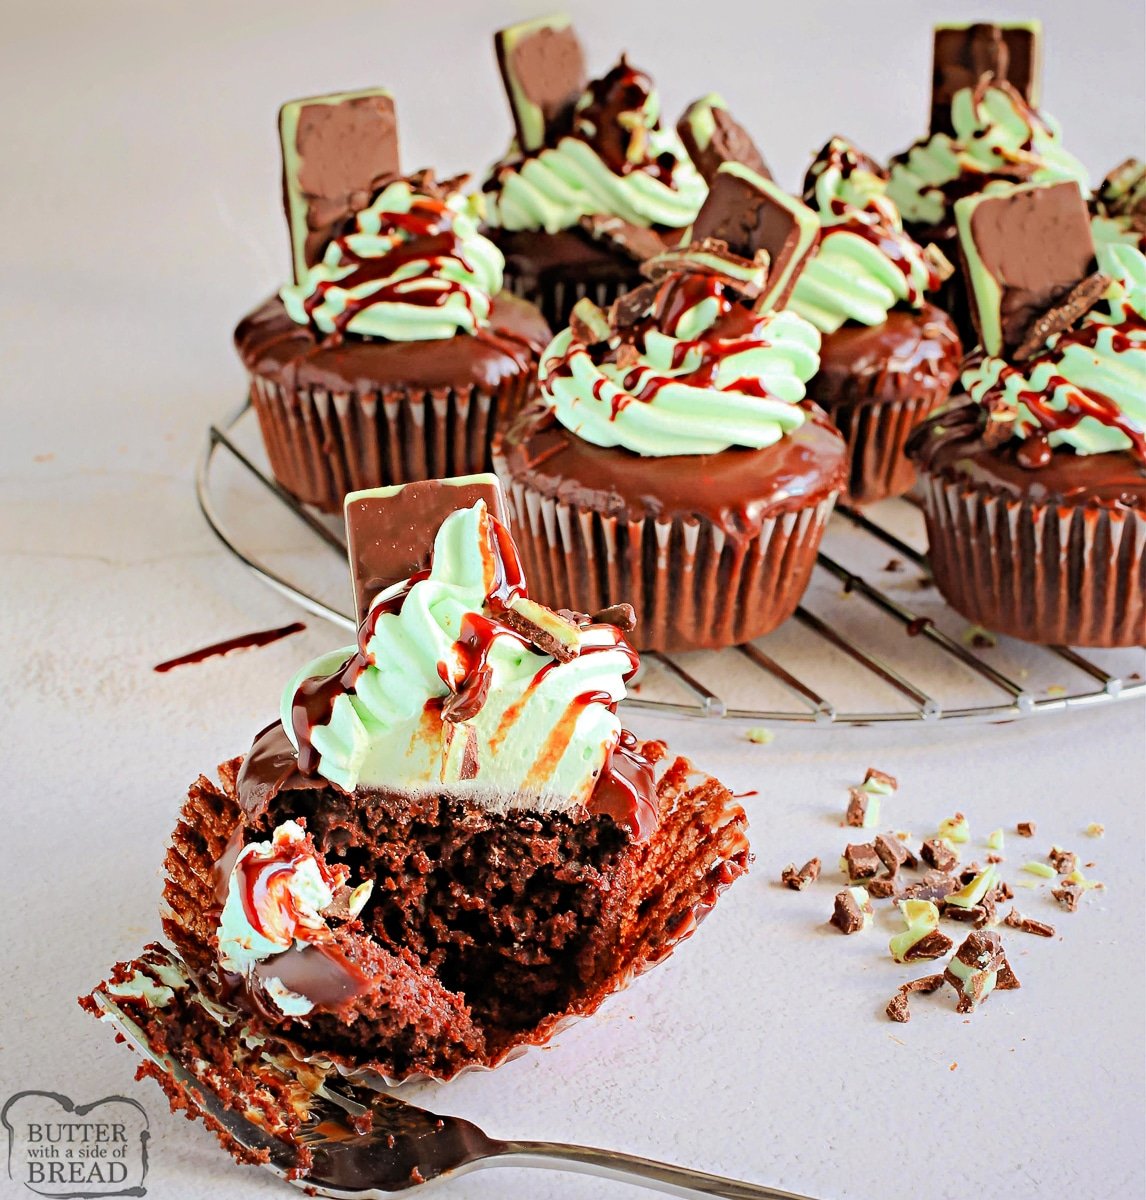 box cake mix made into mint chocolate cupcakes